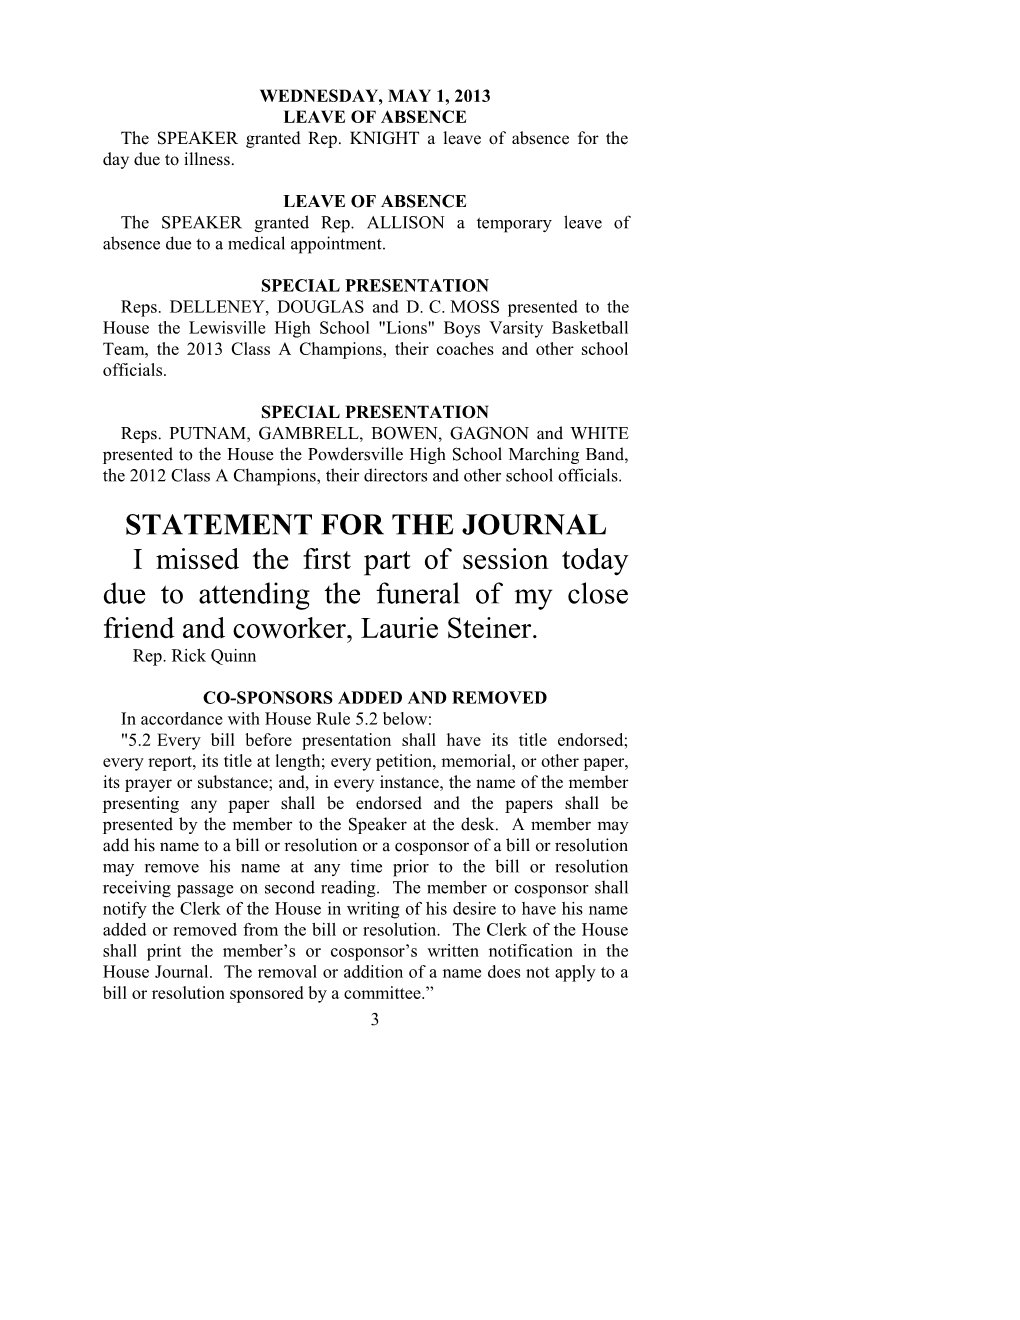 House Journal for May 1, 2013 - South Carolina Legislature Online